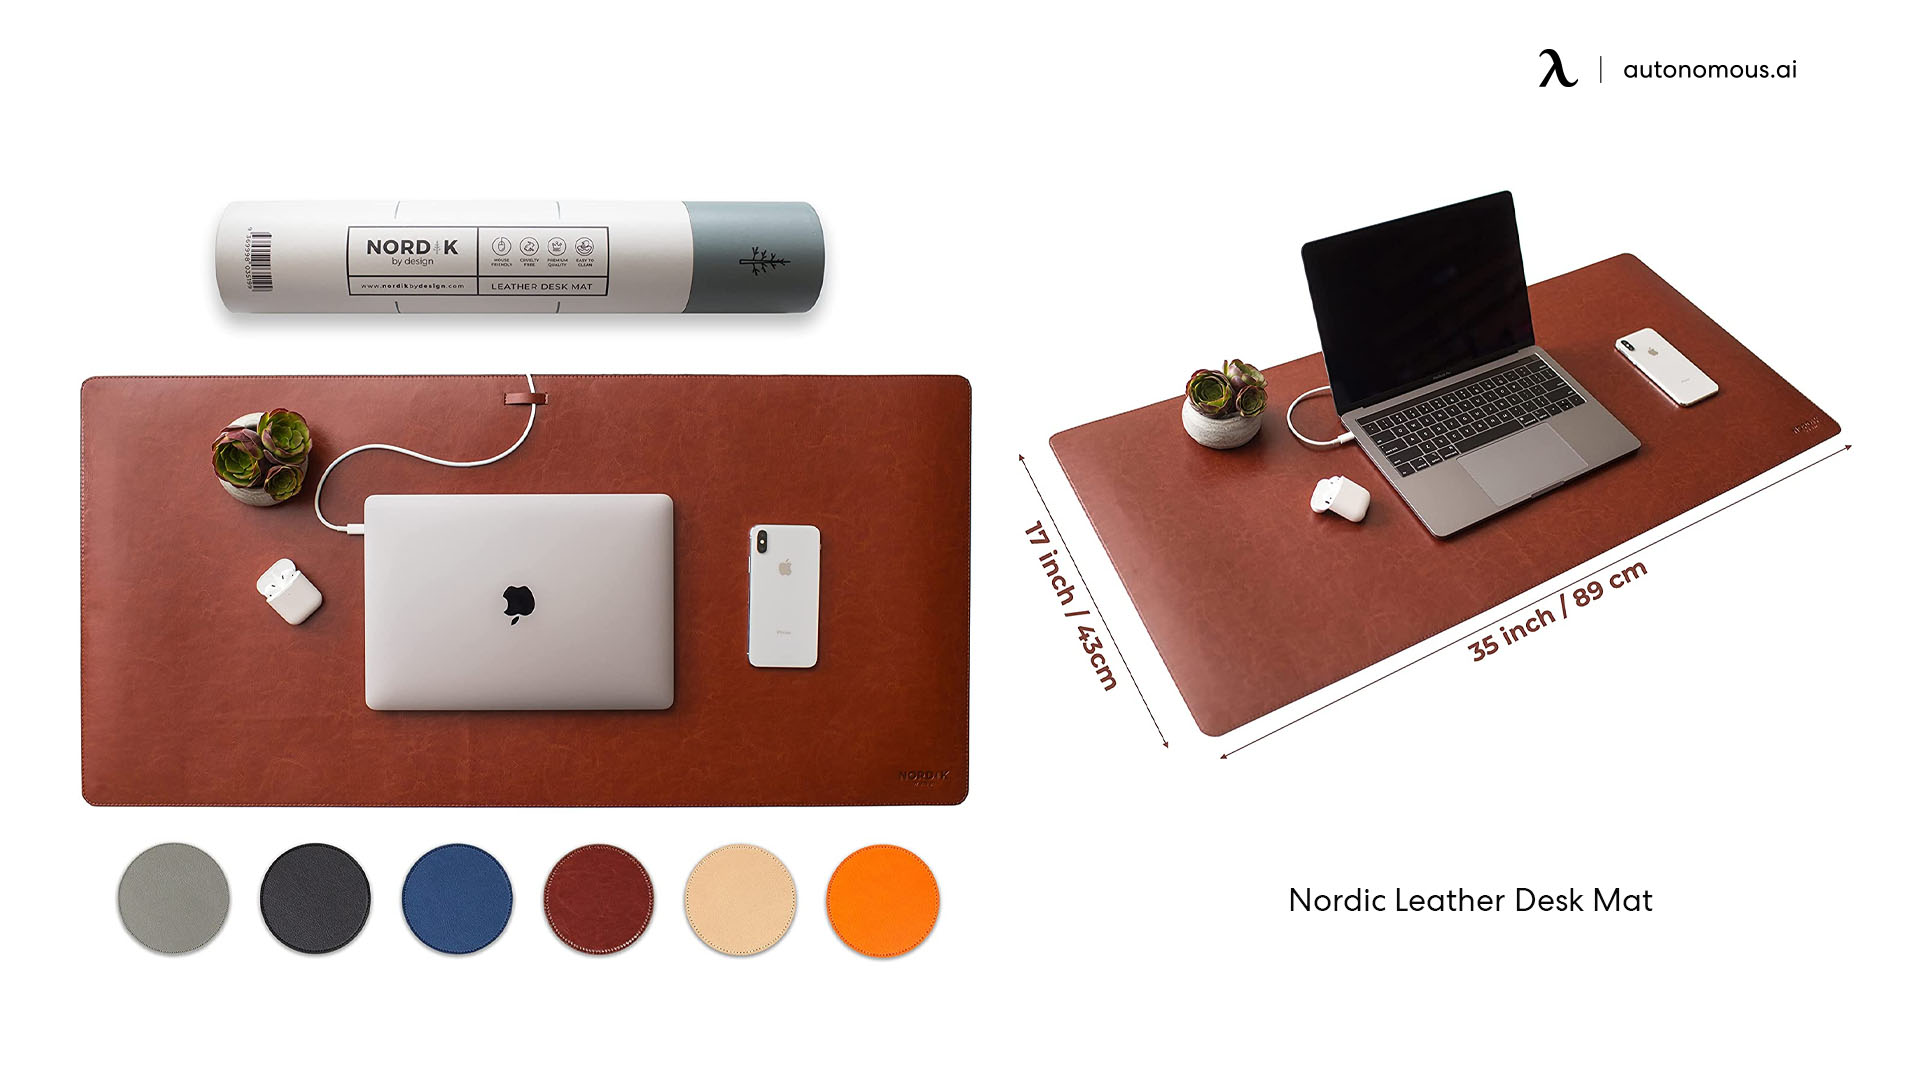 Nordic Leather Desk Mat